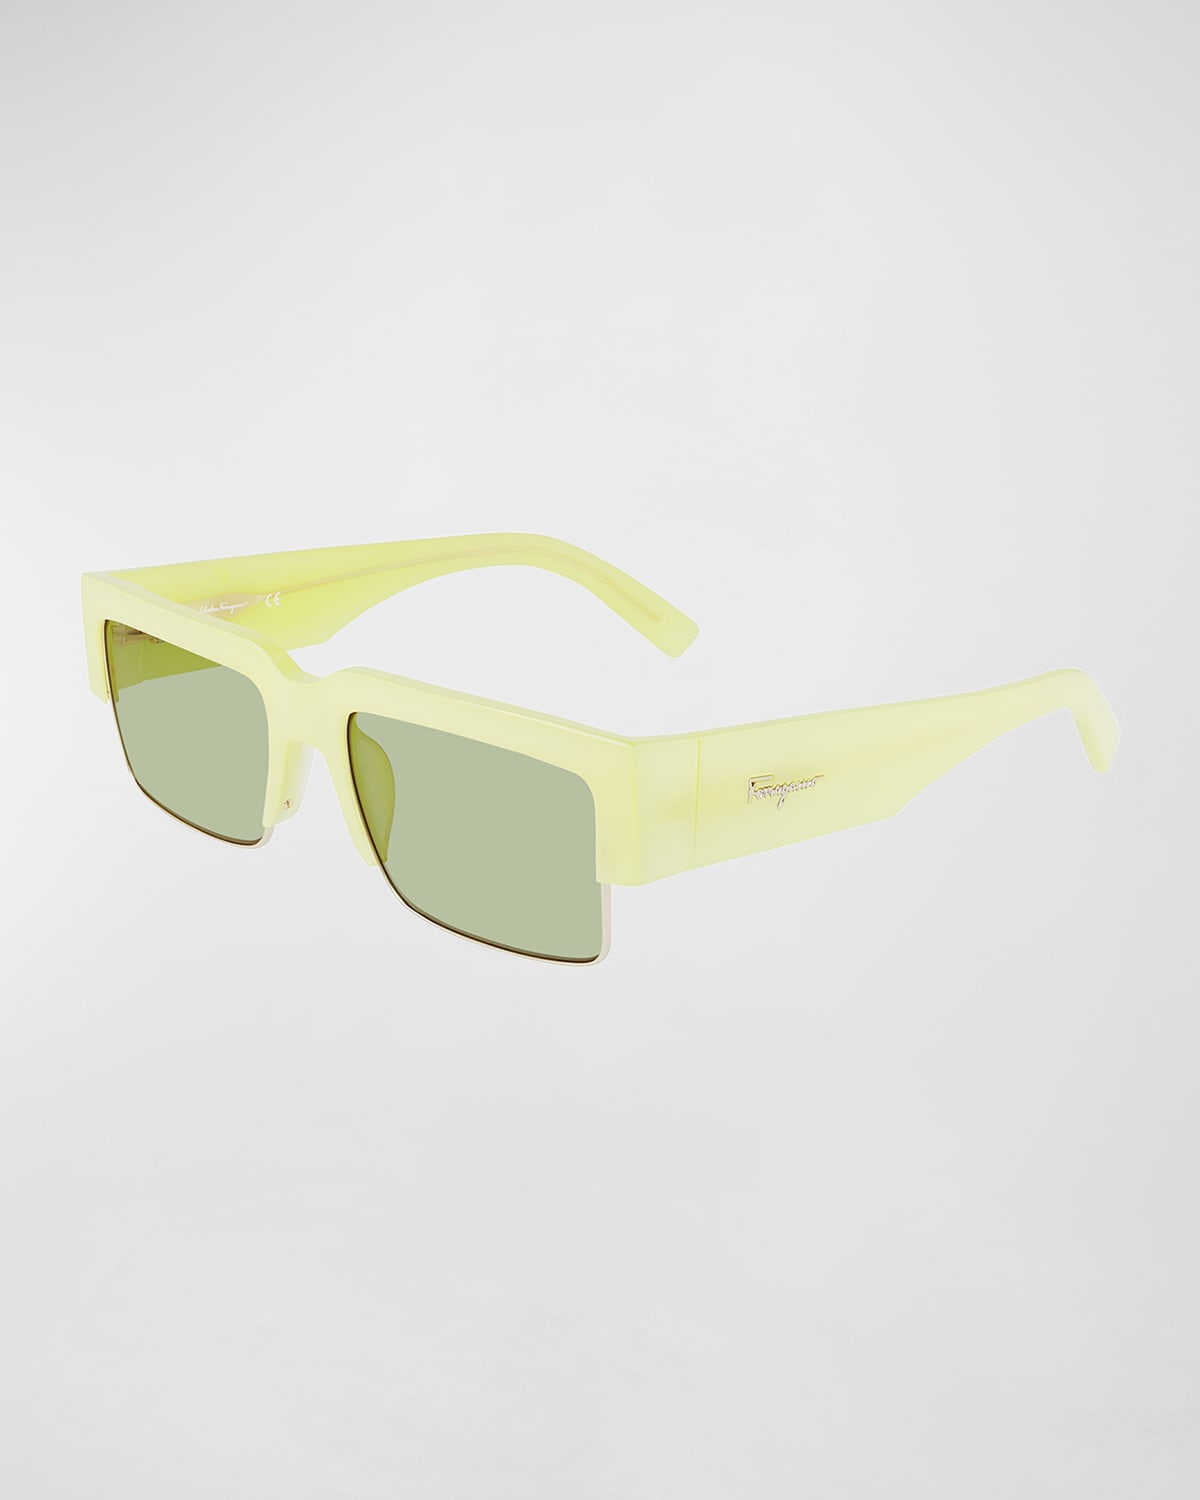 Ferragamo Men's Rectangular Sunglasses With Acetate Brow In Lime Light Yellow